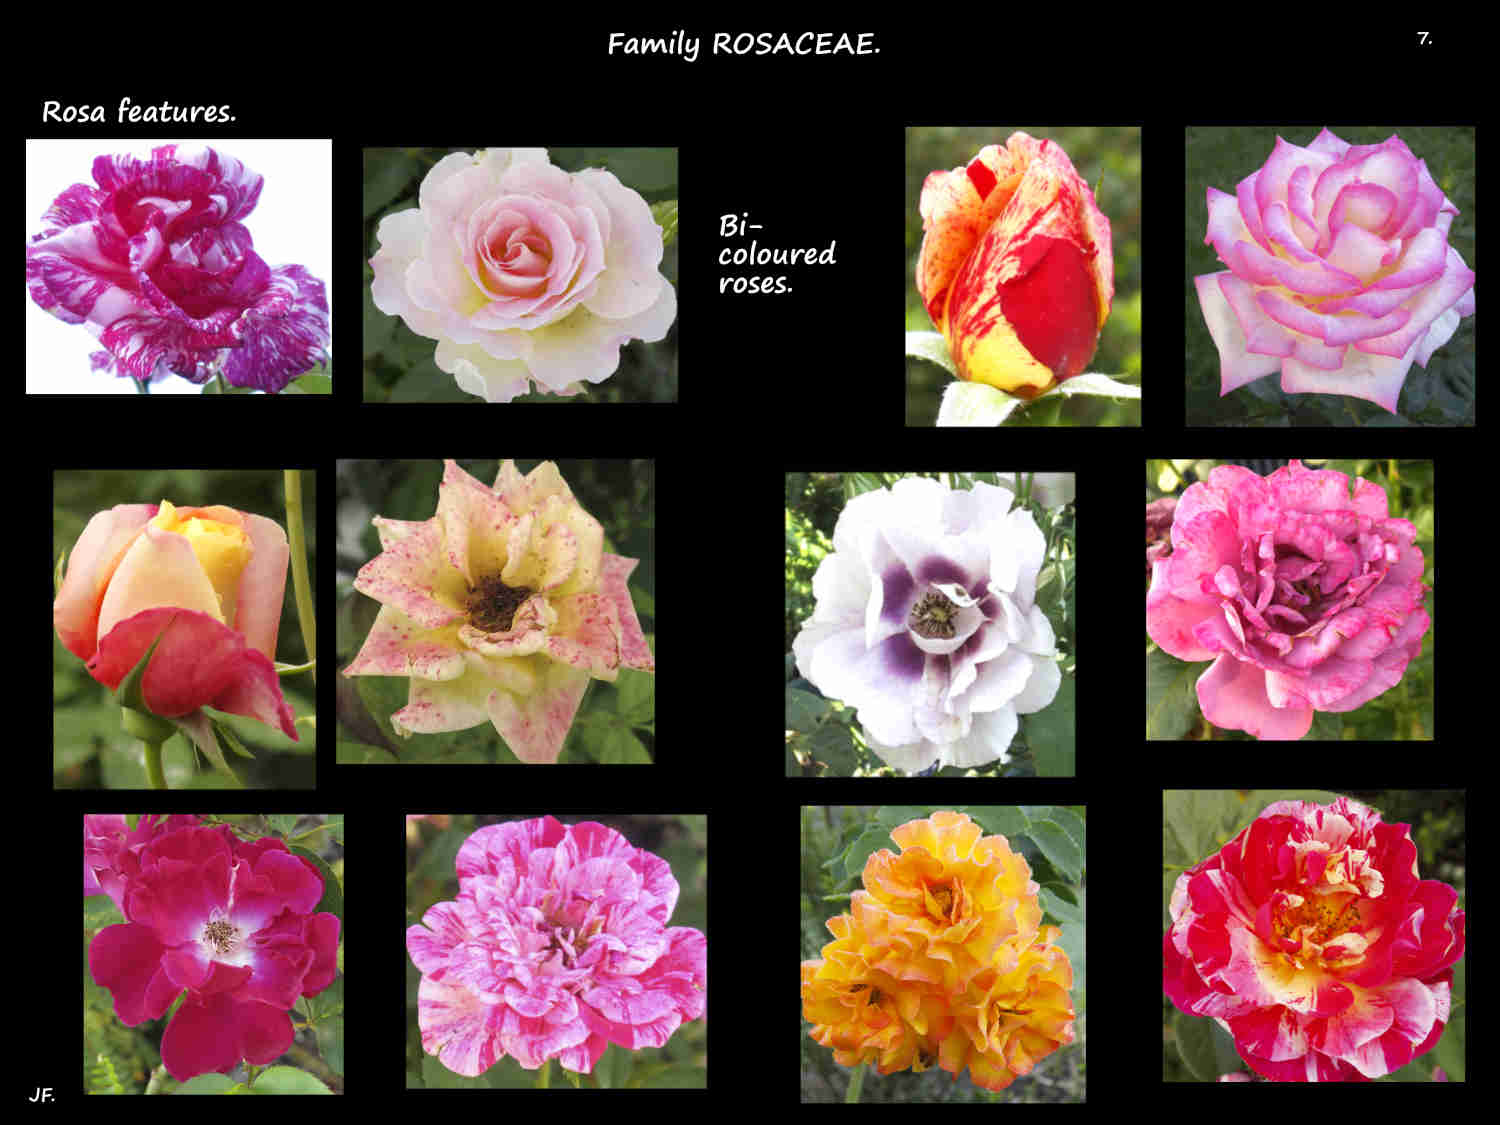 7 Some bi-coloured roses